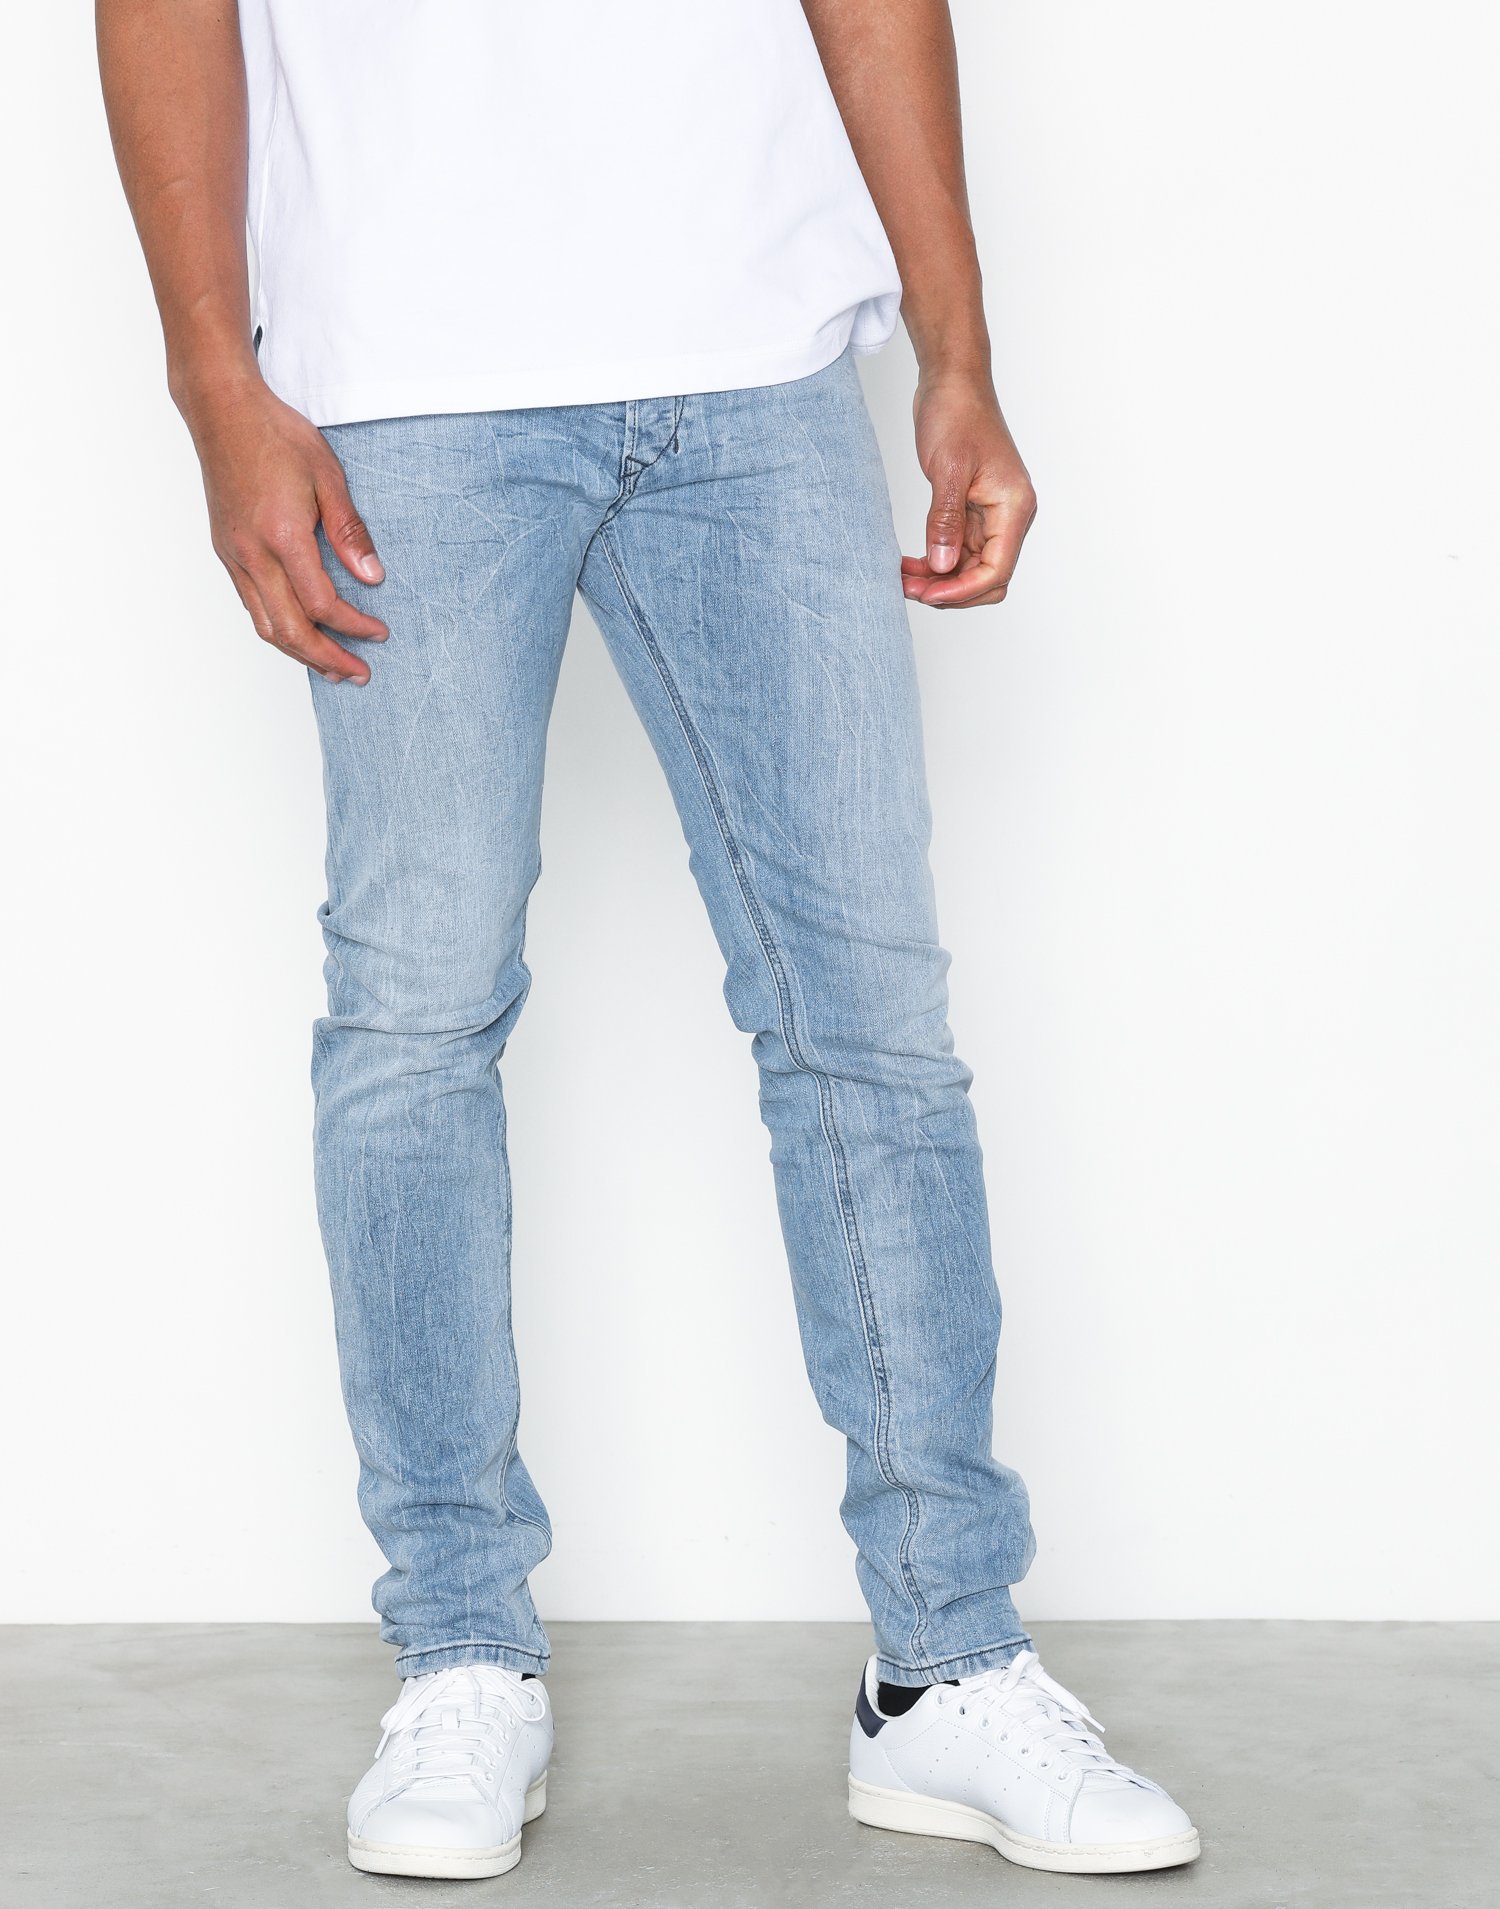 081Al Tepphar Trousers - Diesel - Denim - Jeans - Clothing - Men ...